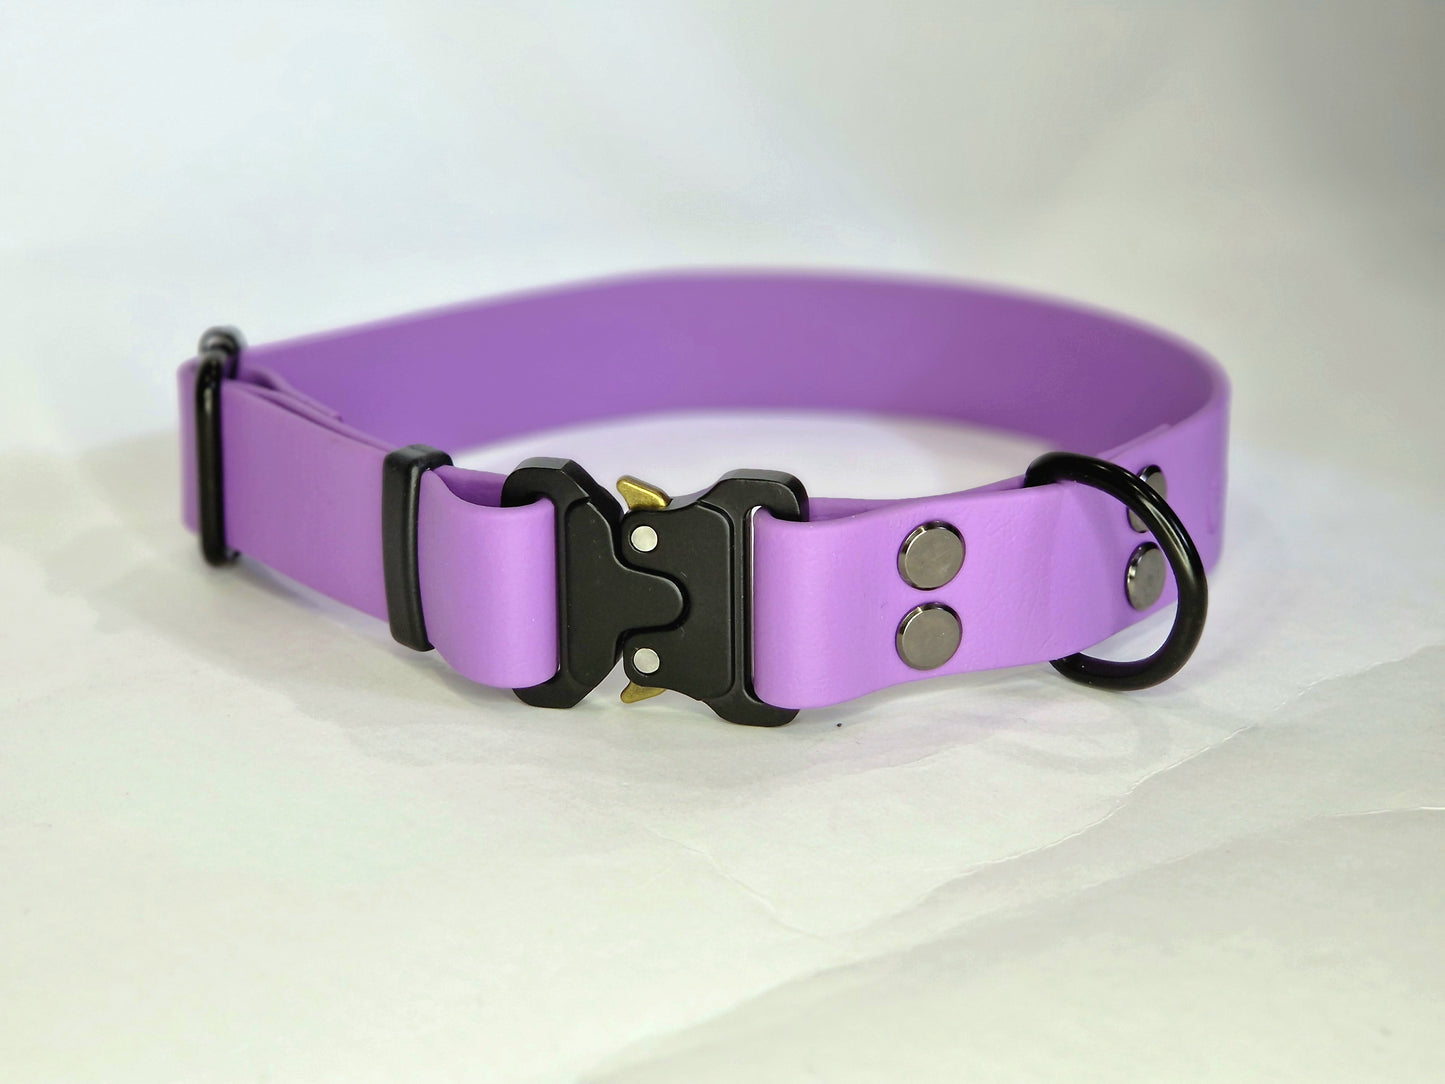 Biothane Black quick safe-lock dog collar  - Color choice